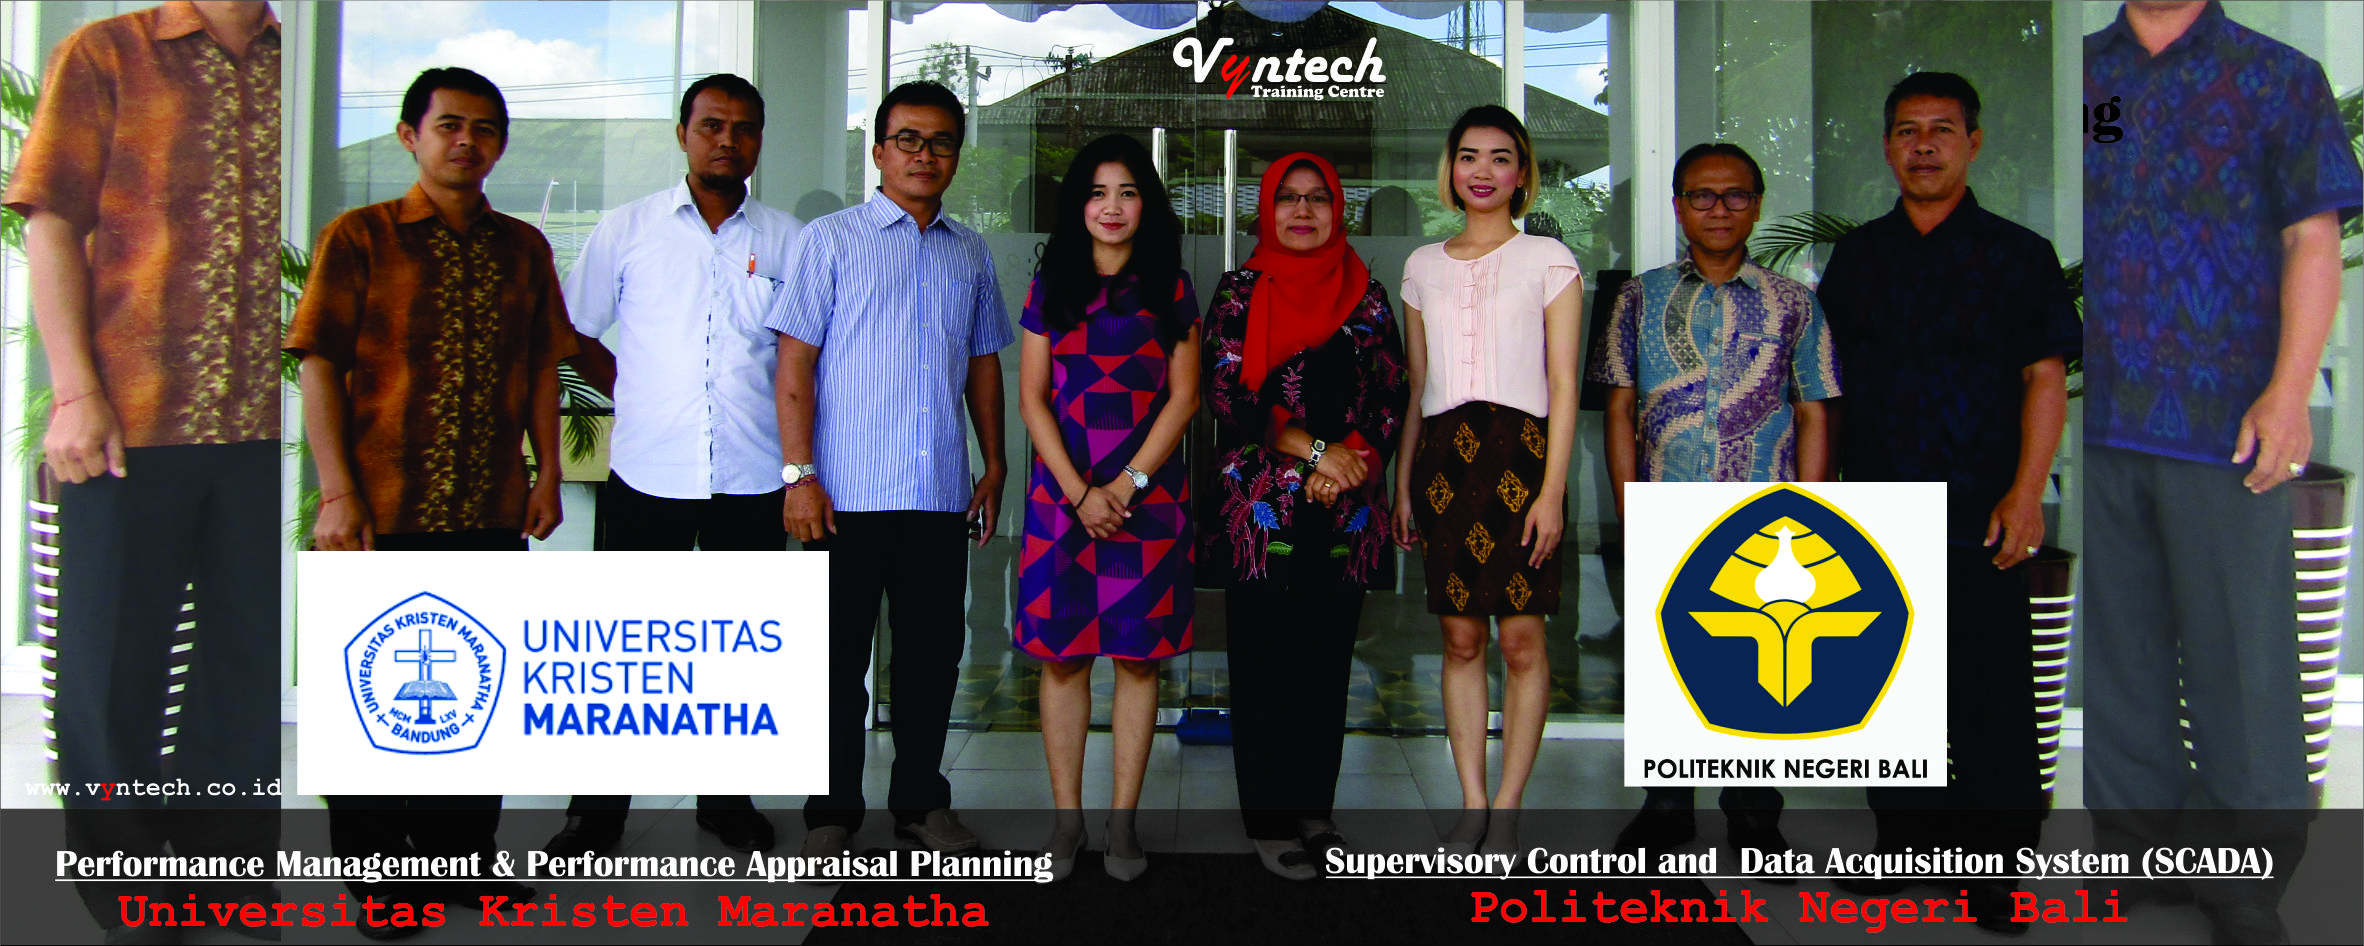 20170814 Training Performance Management & Performance Appraisal Planning - Universitas Kristen Maranatha -- Supervisory Control and Data Acquisition System (SCADA) - Politeknik Negeri Bali